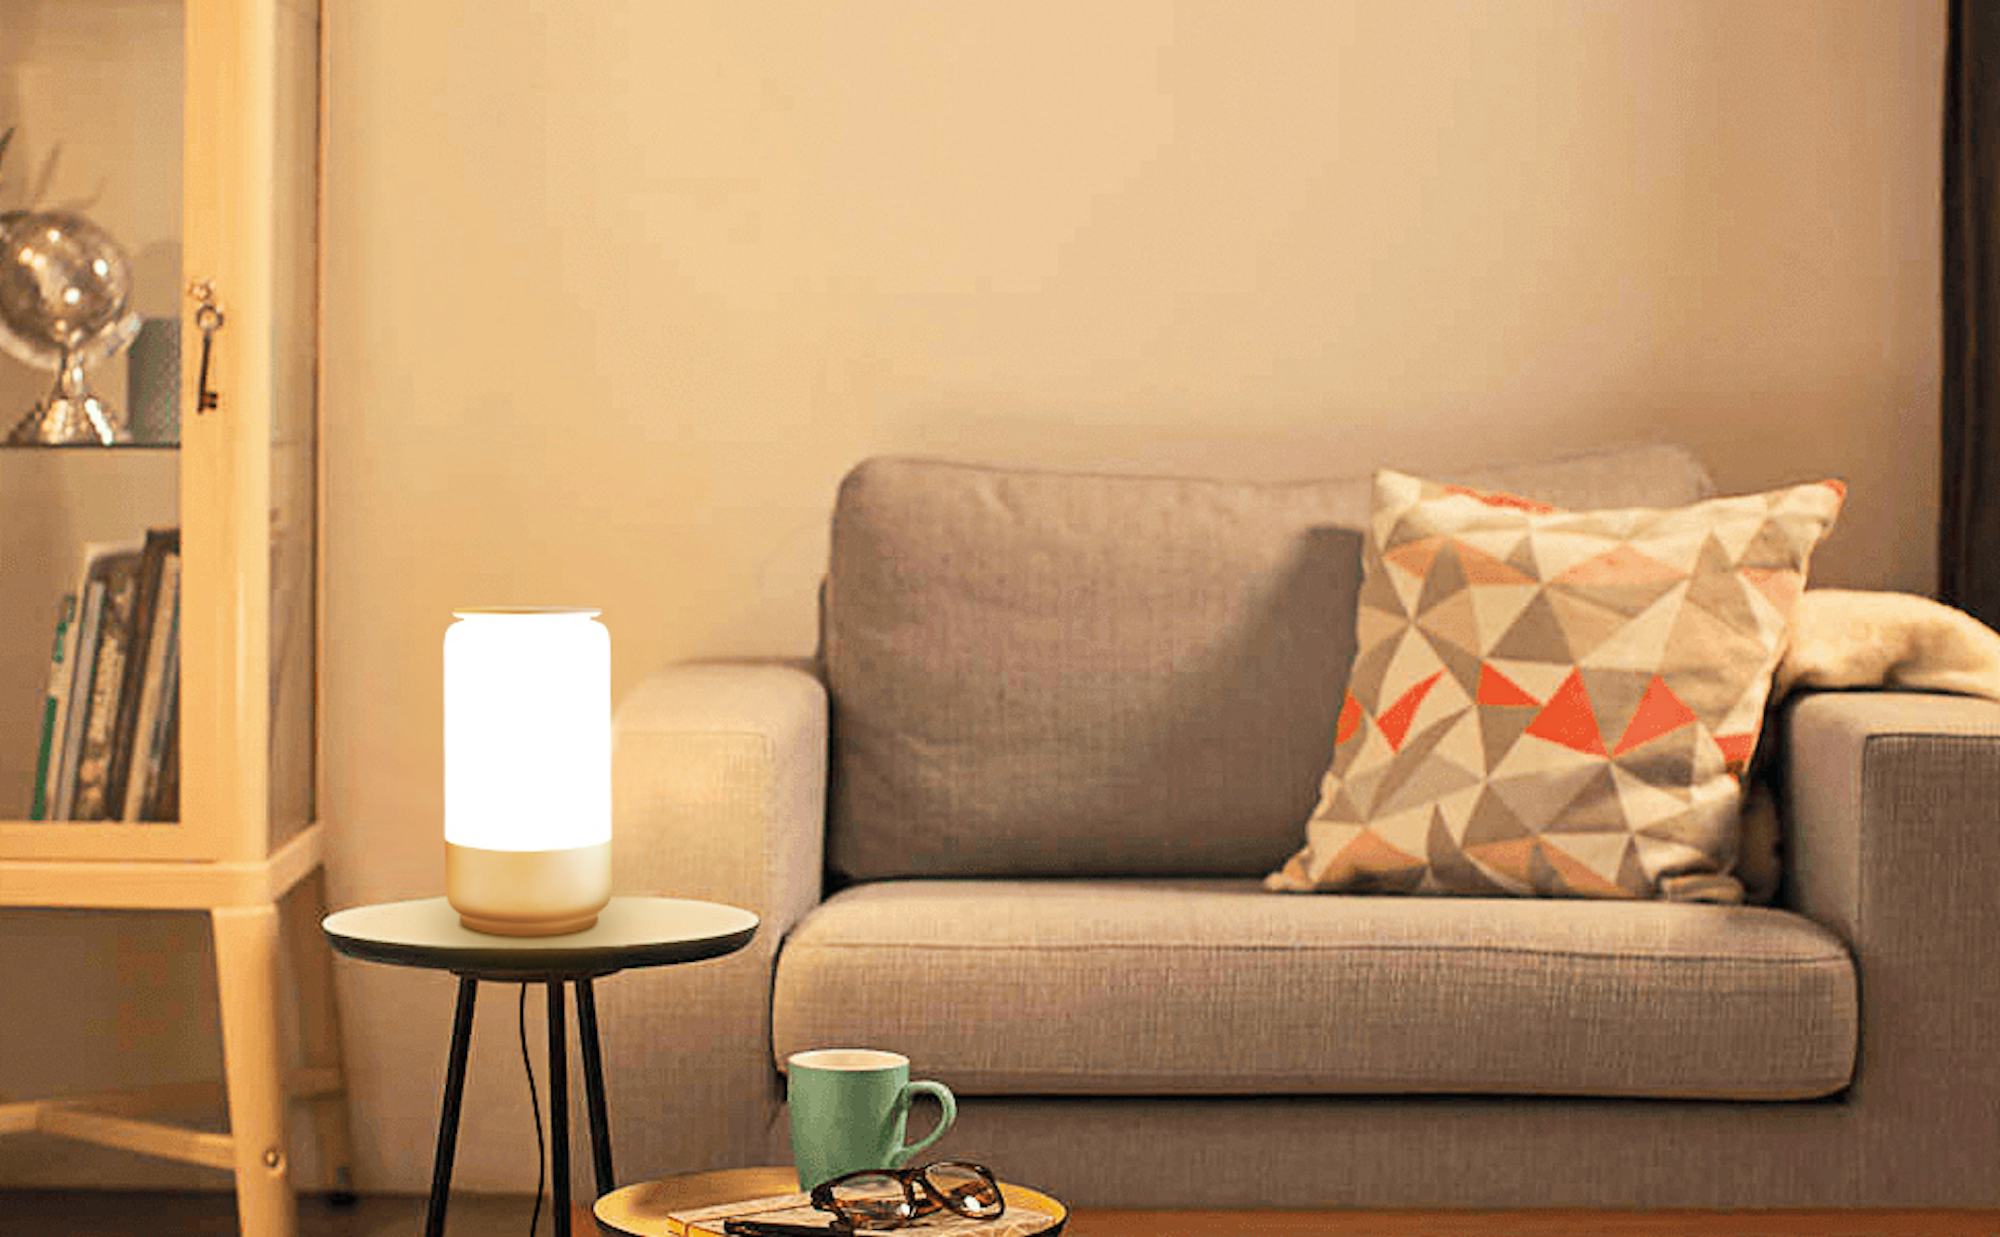 Best Smart Lamps For Living Room